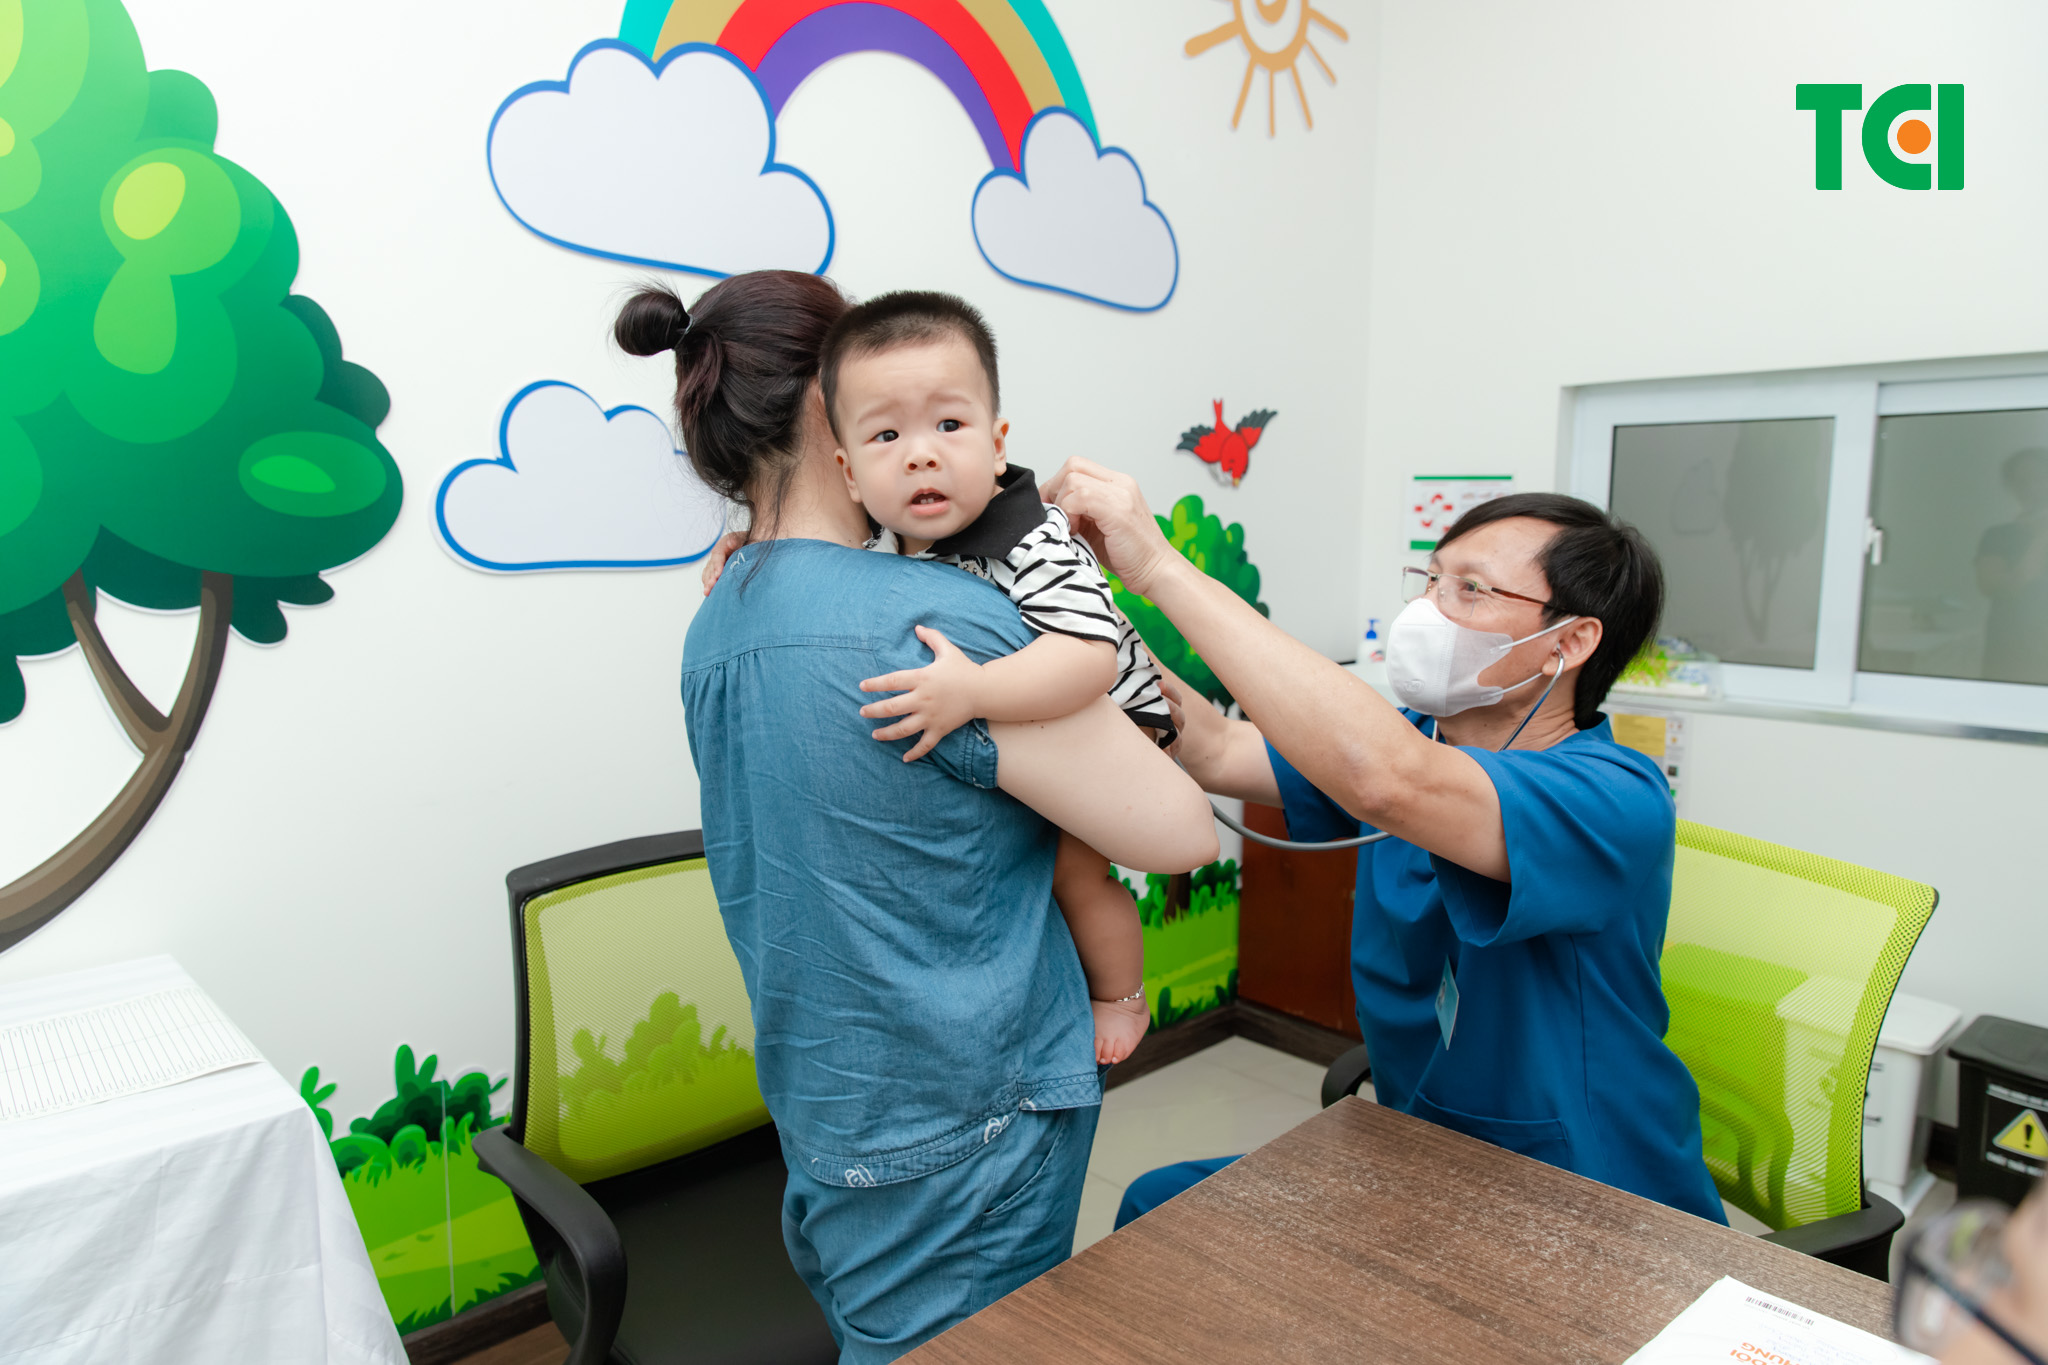 Thu Cuc TCI ワクチン接種クリニックは、評判の良いワクチン接種サービス施設の 1 つです。